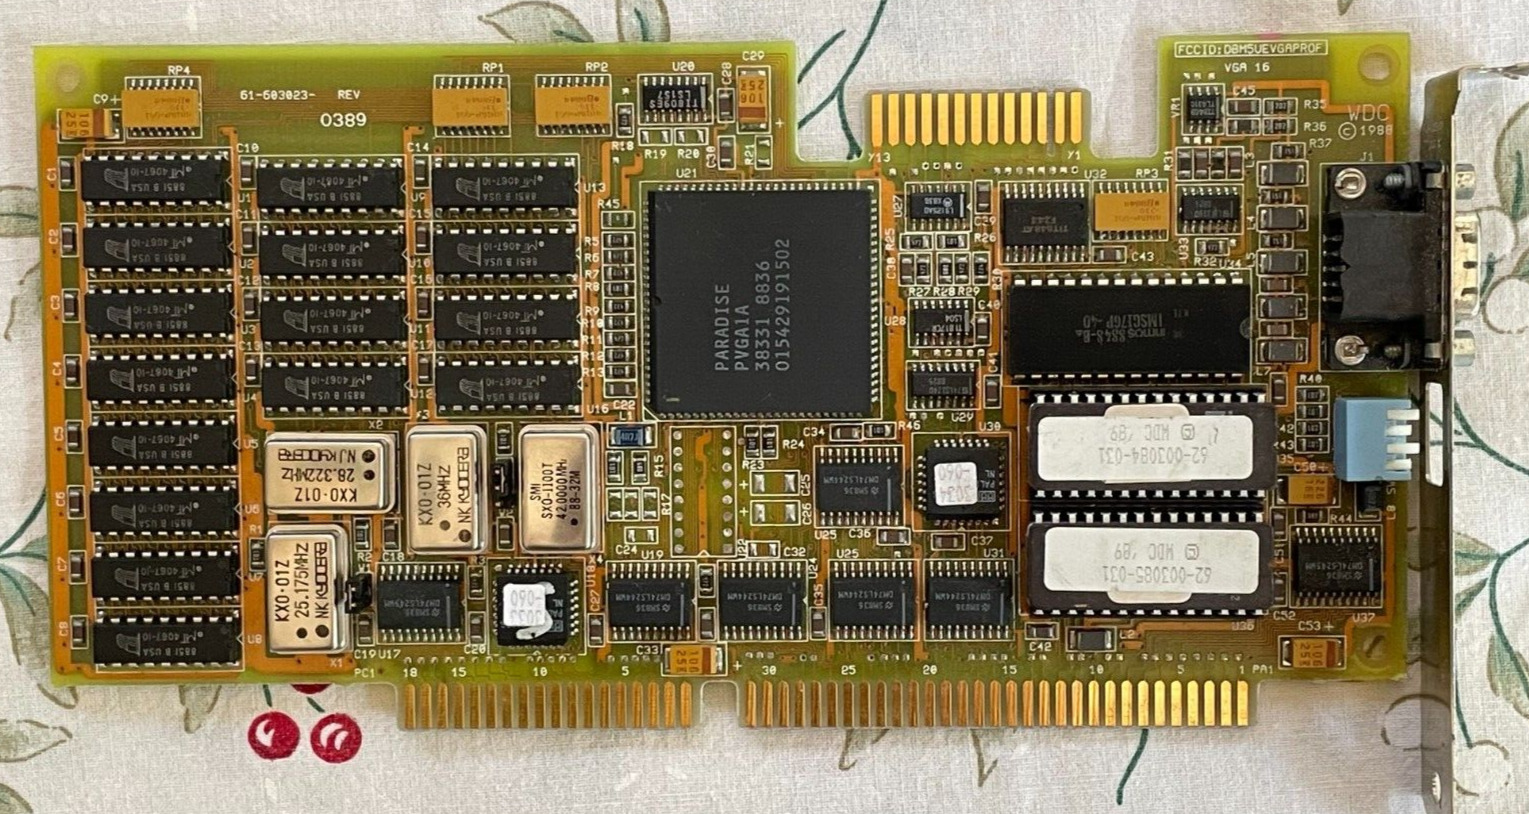 Vintage 16 bit ISA VGA Card - WDC Paradise 1989 - Model 61-603023